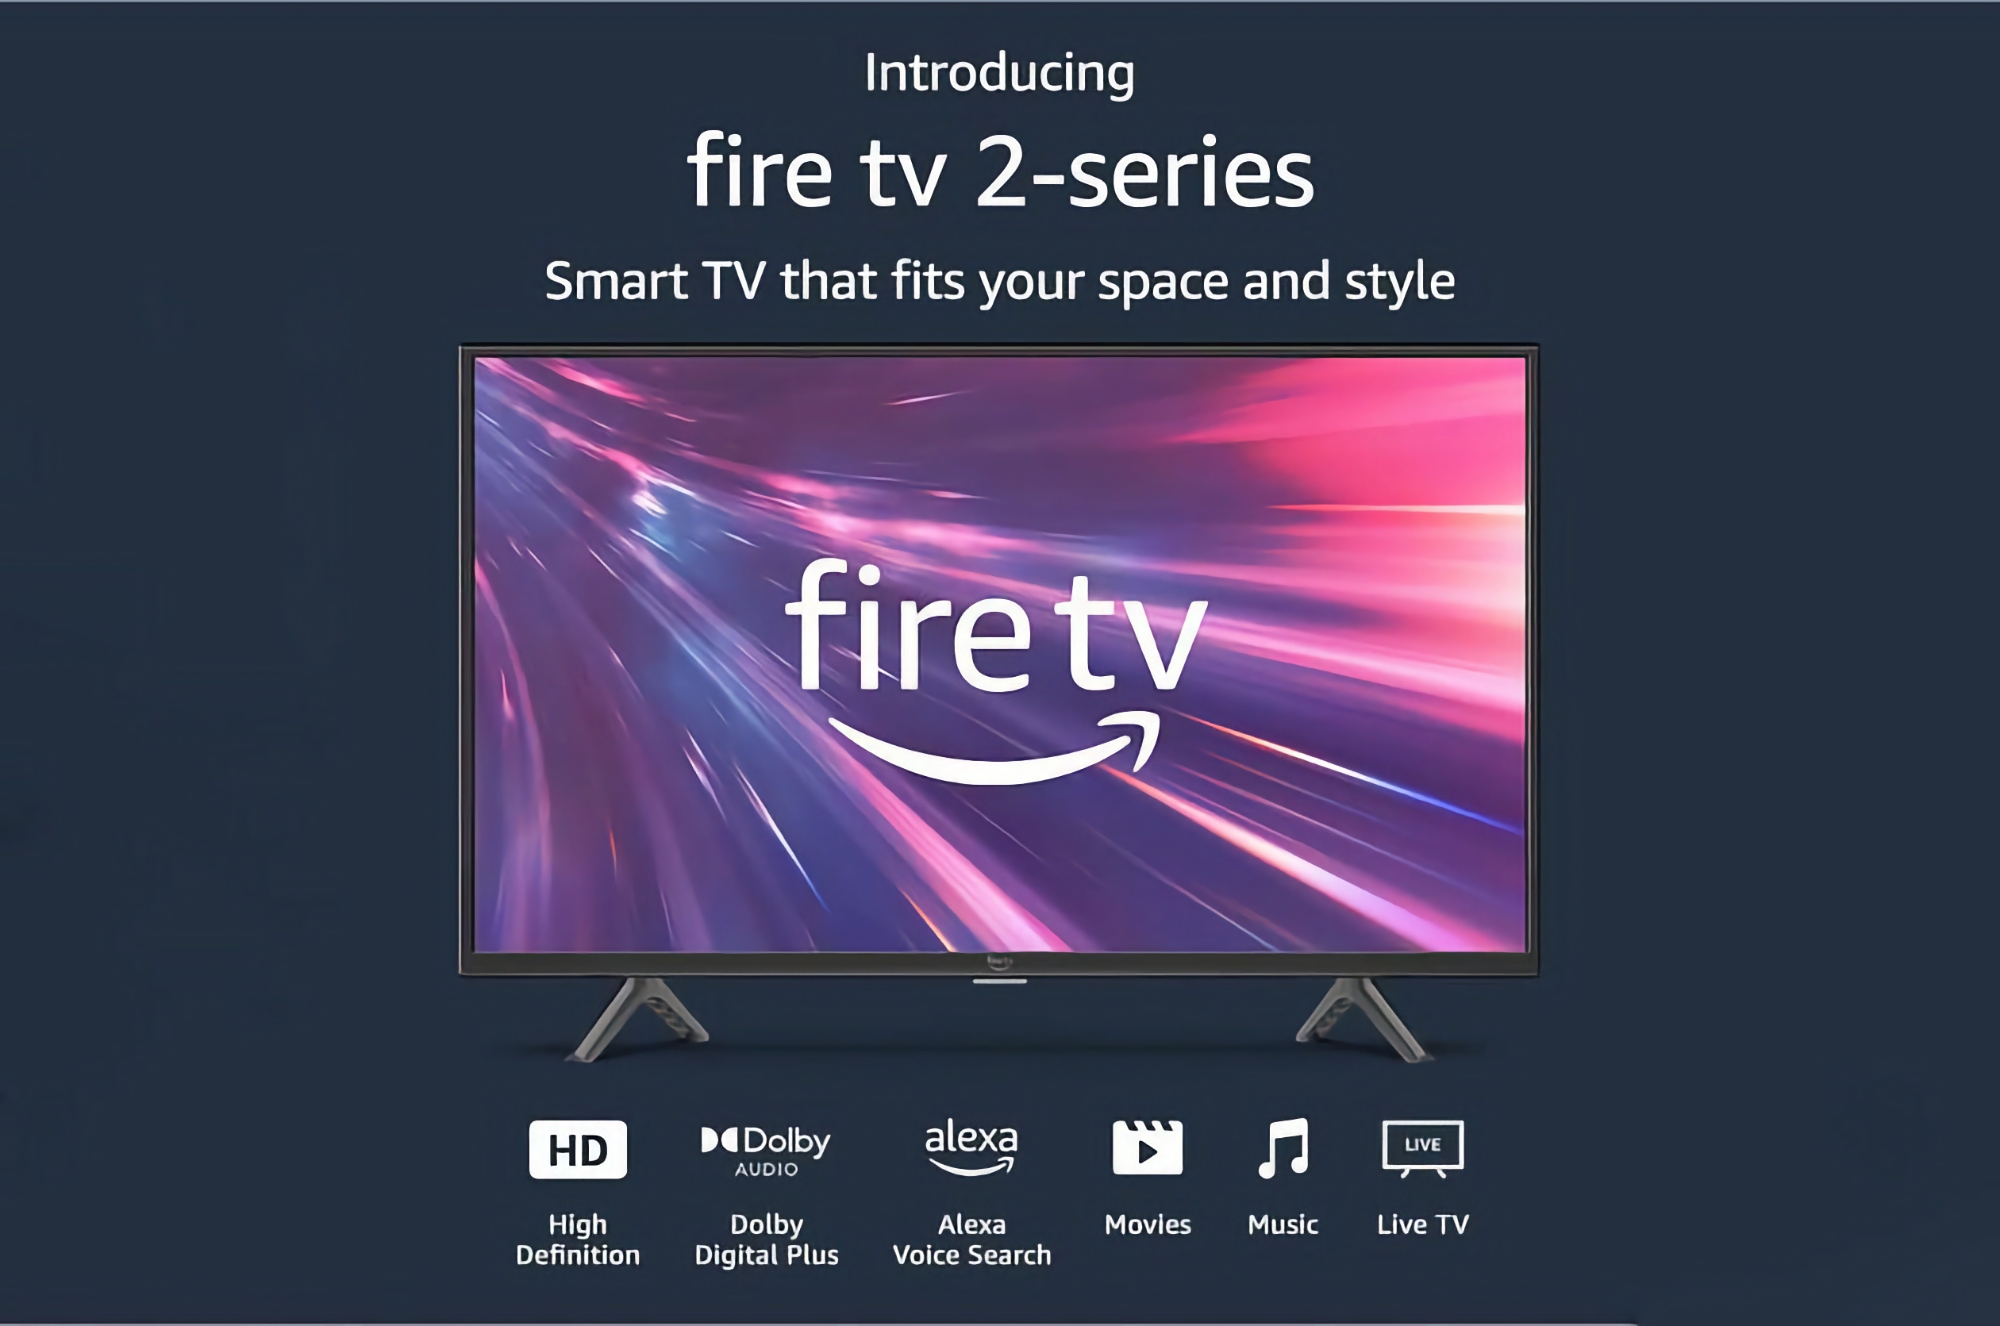 Amazon Fire TV 2 med en 32-tommers skjerm med 40% rabatt